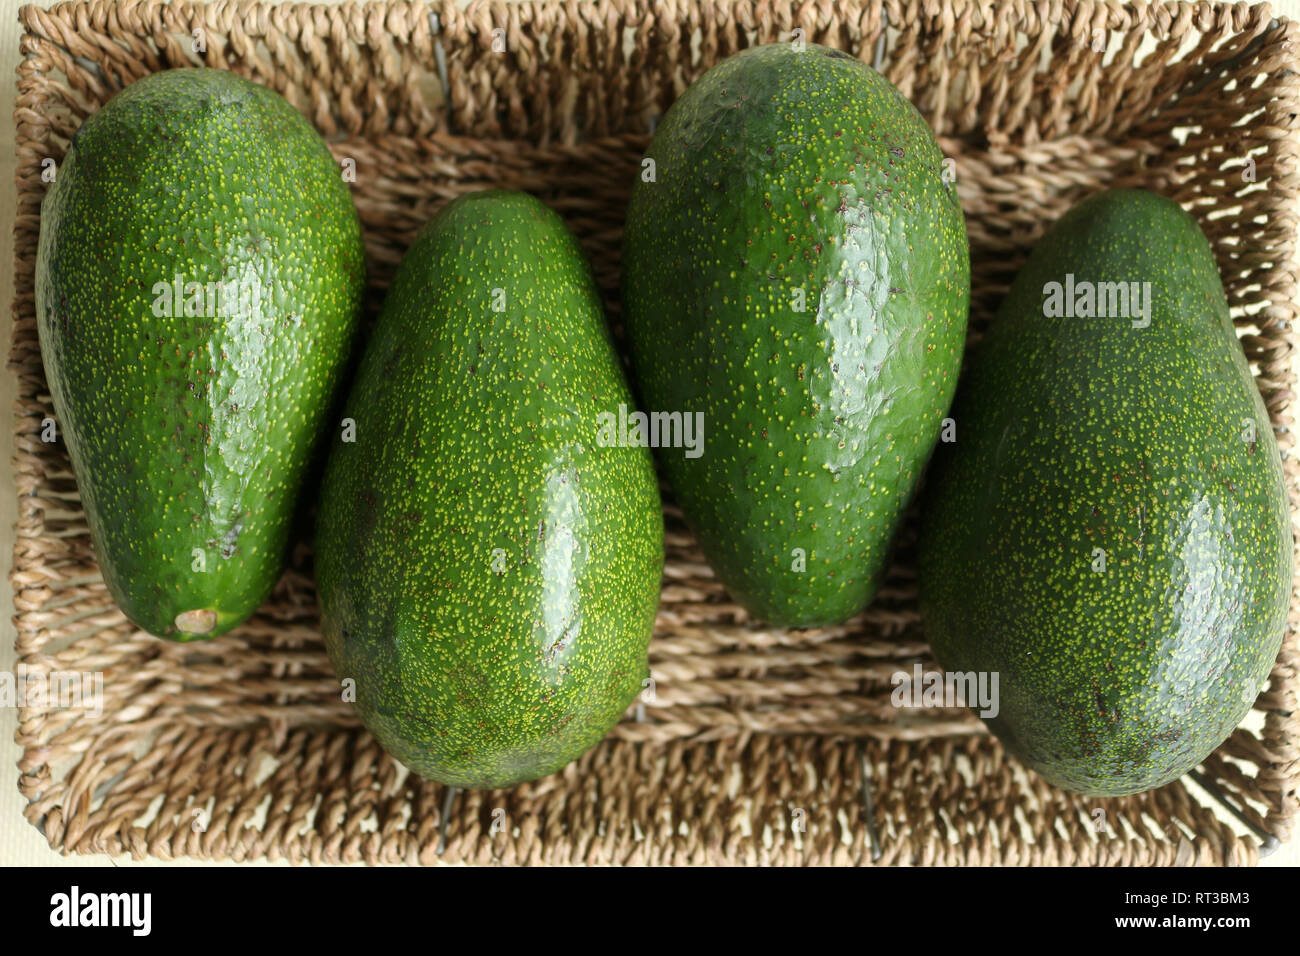 https://c8.alamy.com/comp/RT3BM3/overhead-shot-of-four-green-avocados-in-a-rectangular-shaped-straw-fruit-basket-RT3BM3.jpg